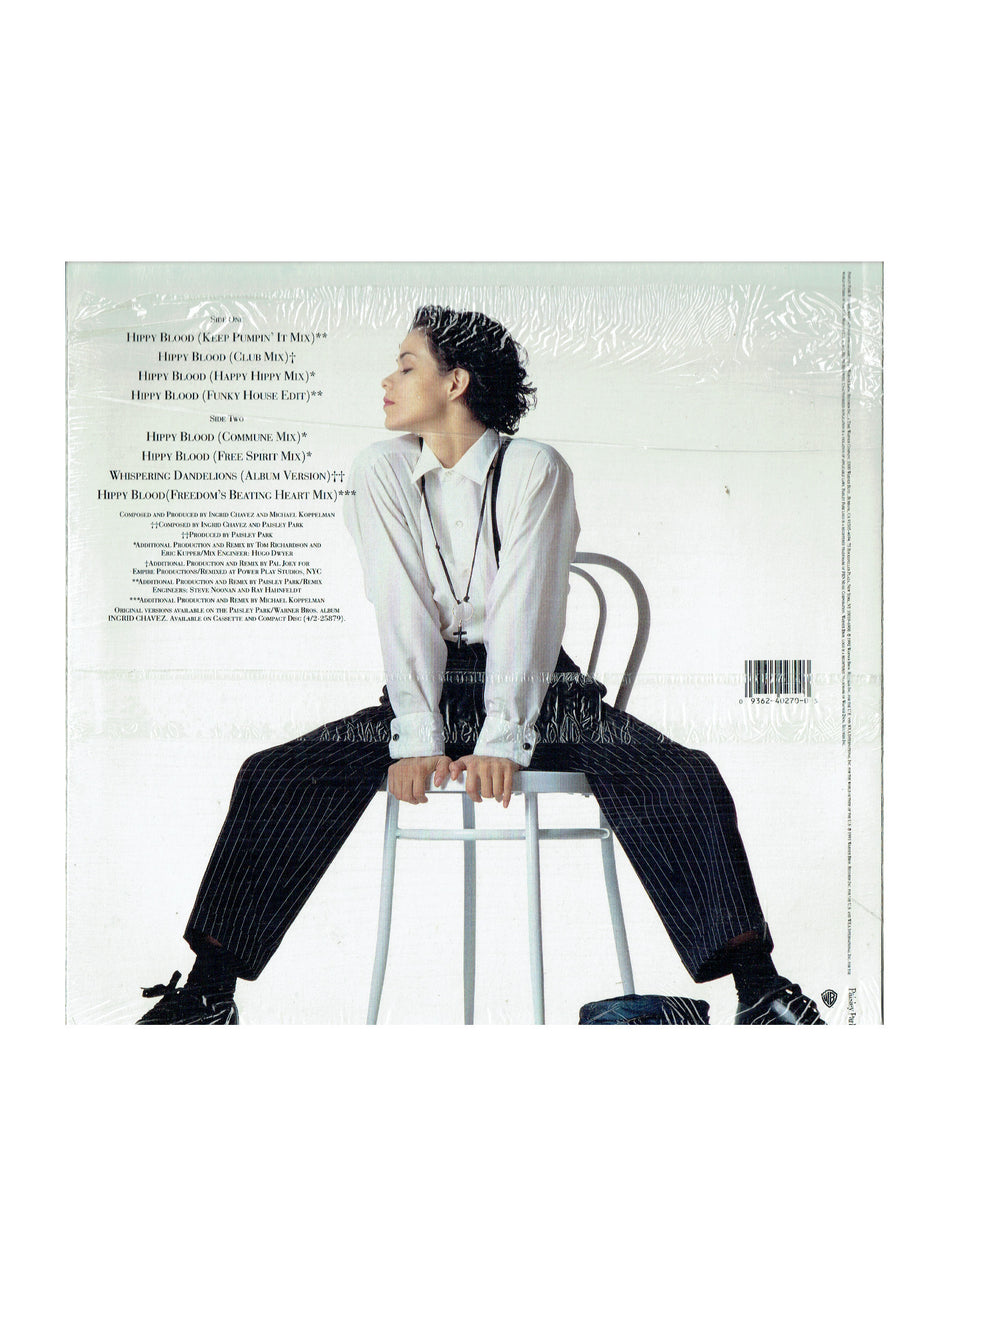 Prince – Ingrid Chavez Hippy Blood 12 Inch Vinyl Single USA Release Prince AS